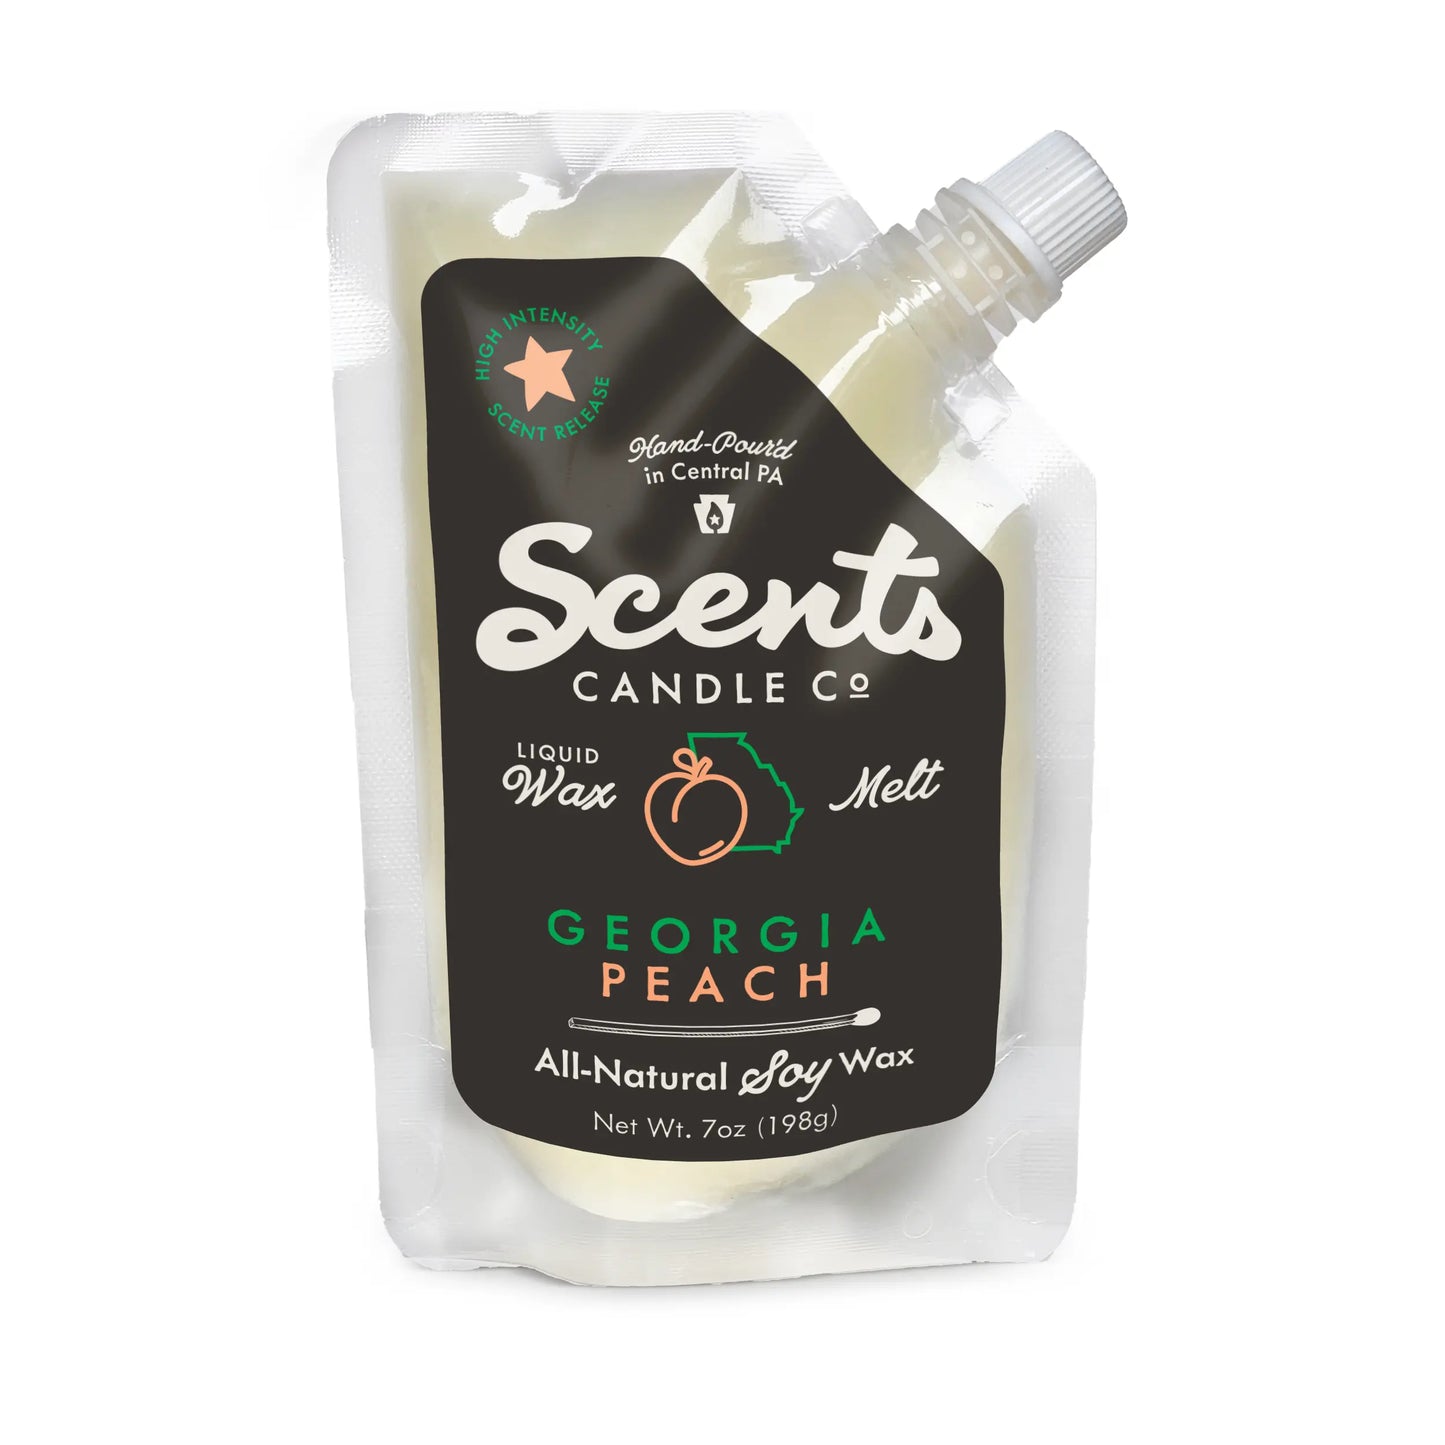 Scents Candle Co. Georgia Peach Liquid Wax Melt